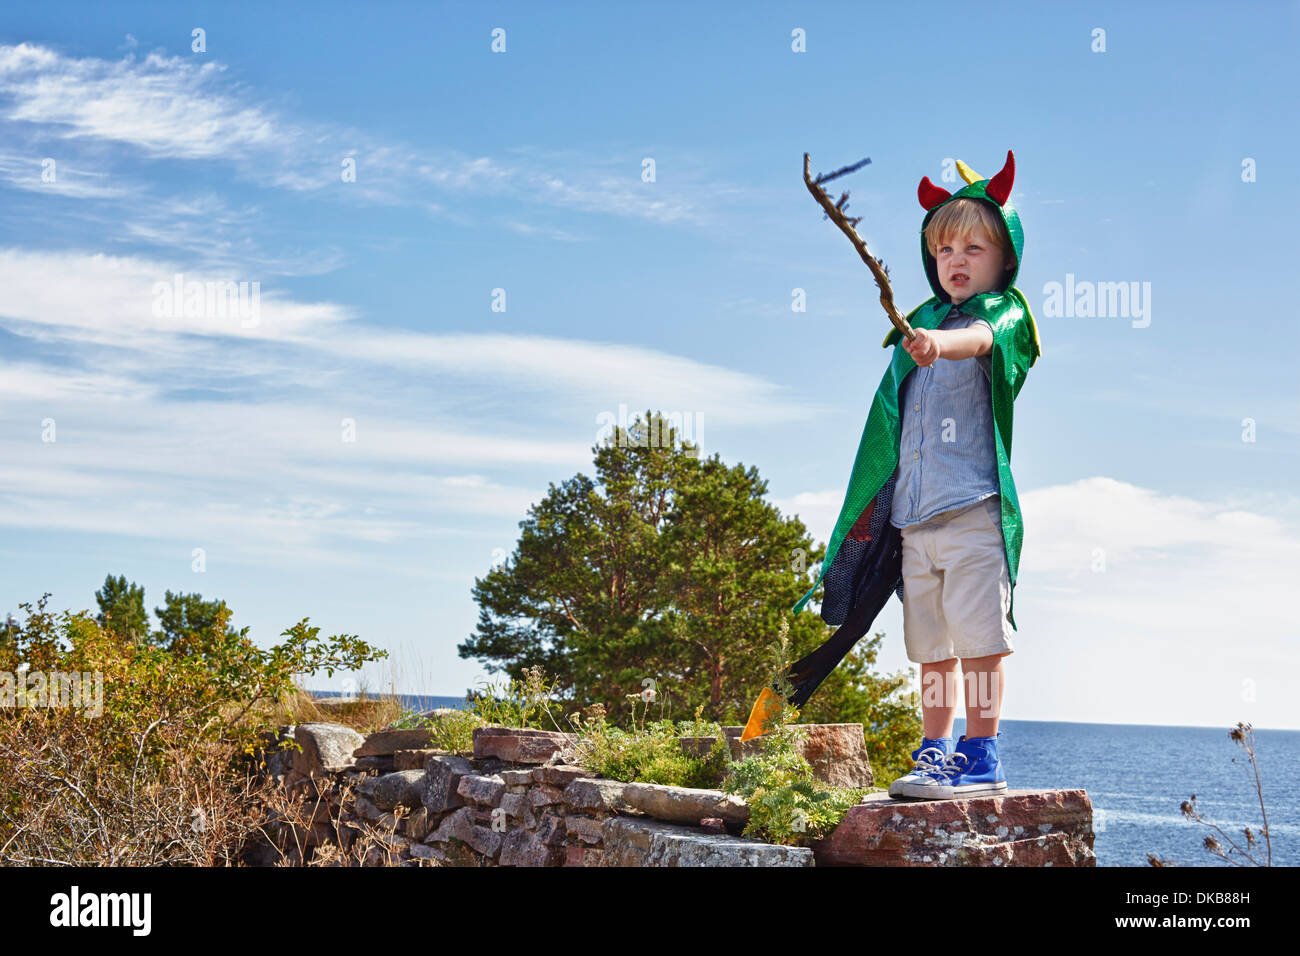 Boy wearing green cape holding stick, Eggergrund, Sweden Stock Photo